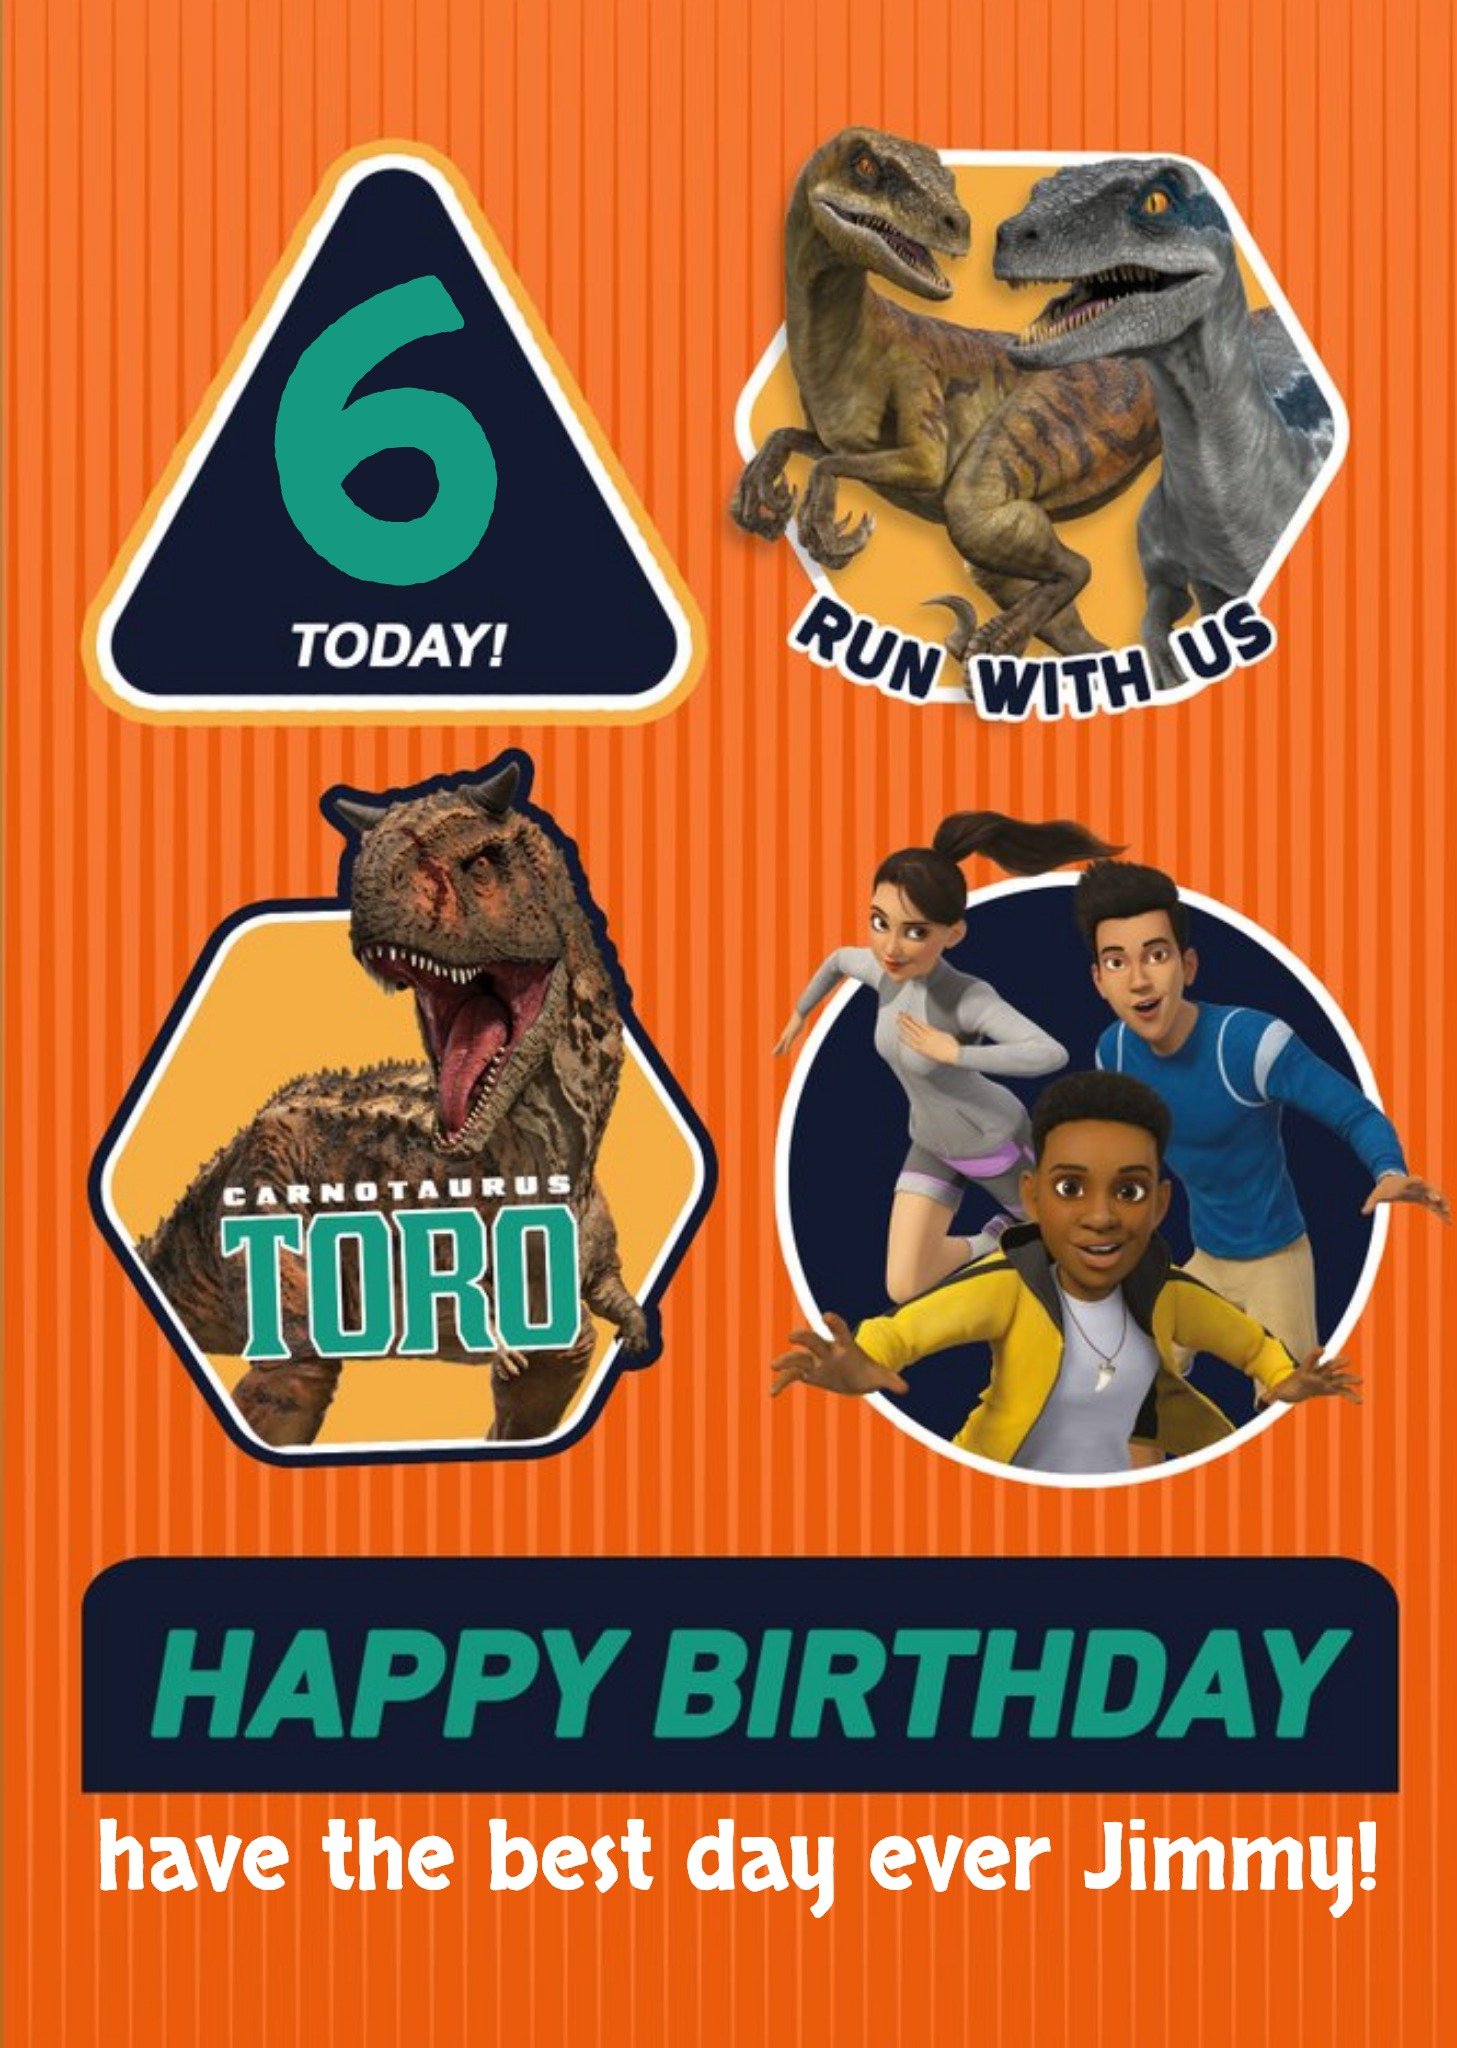 Jurassic World Jurassic Camp Cretaceous Dinosaur Run With Us Birthday Card Ecard